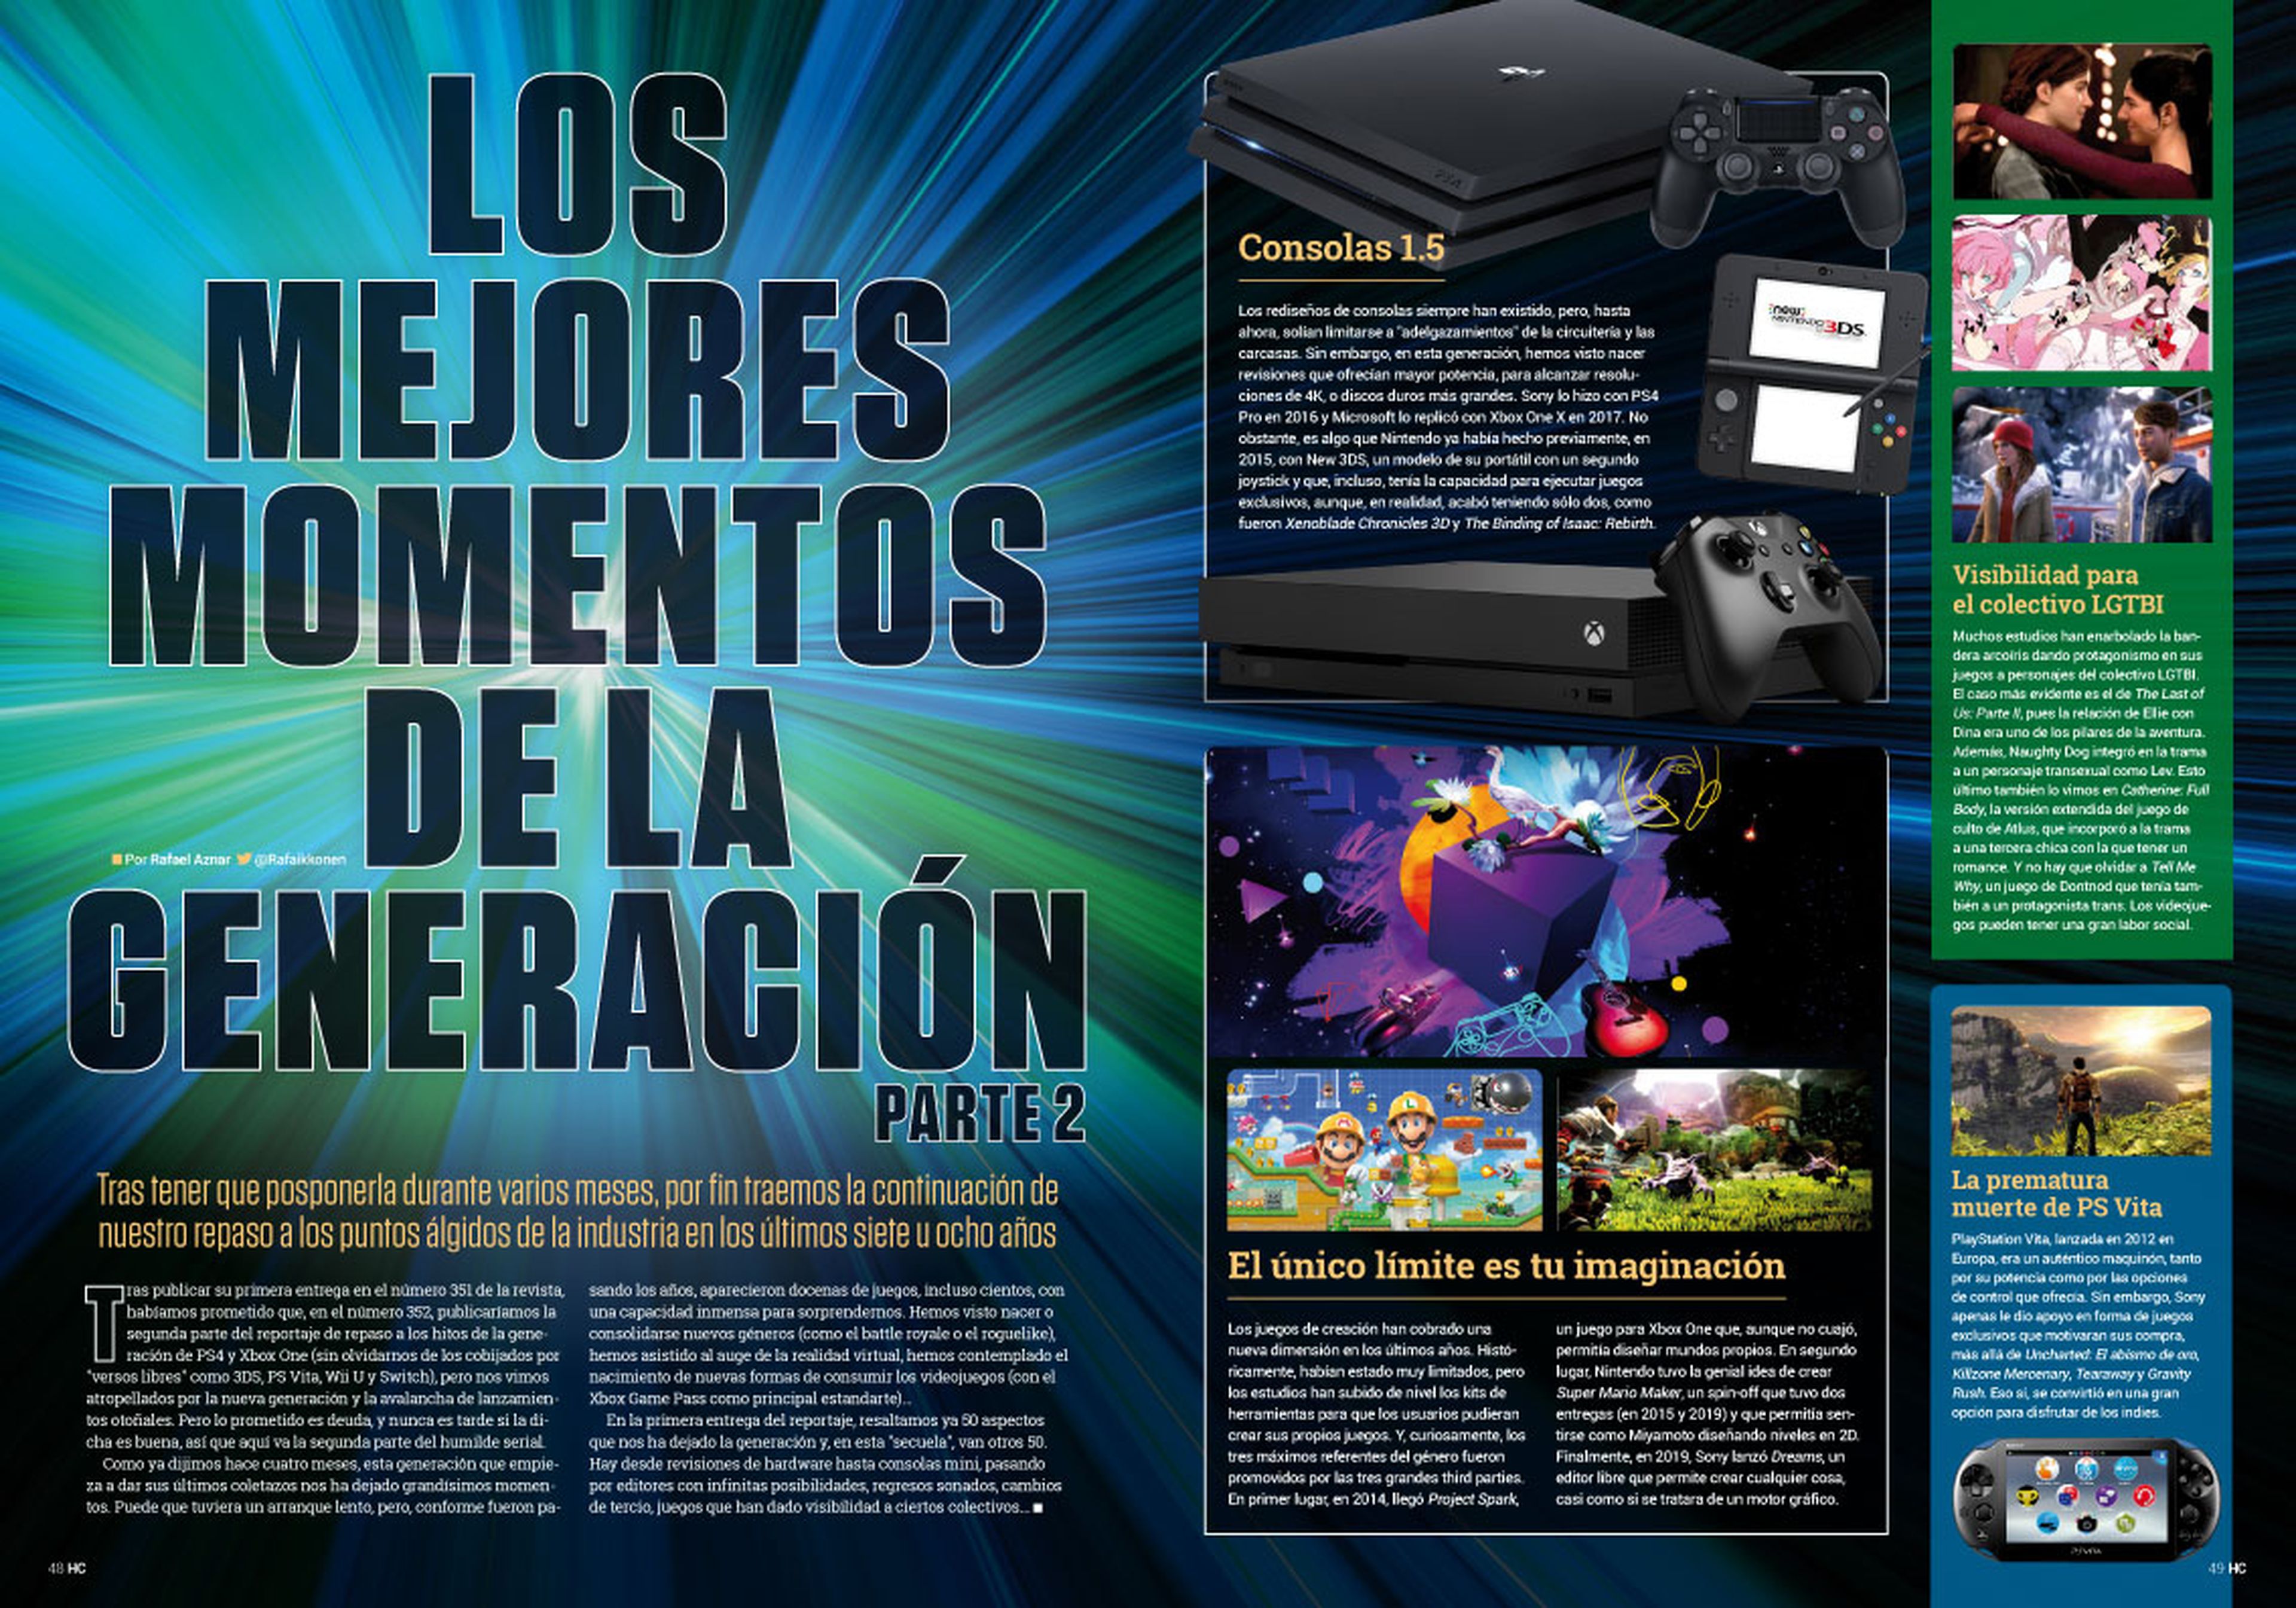 Hobby Consolas 355, a la venta con Super Mario 3D World + Bowser’s Fury en portada